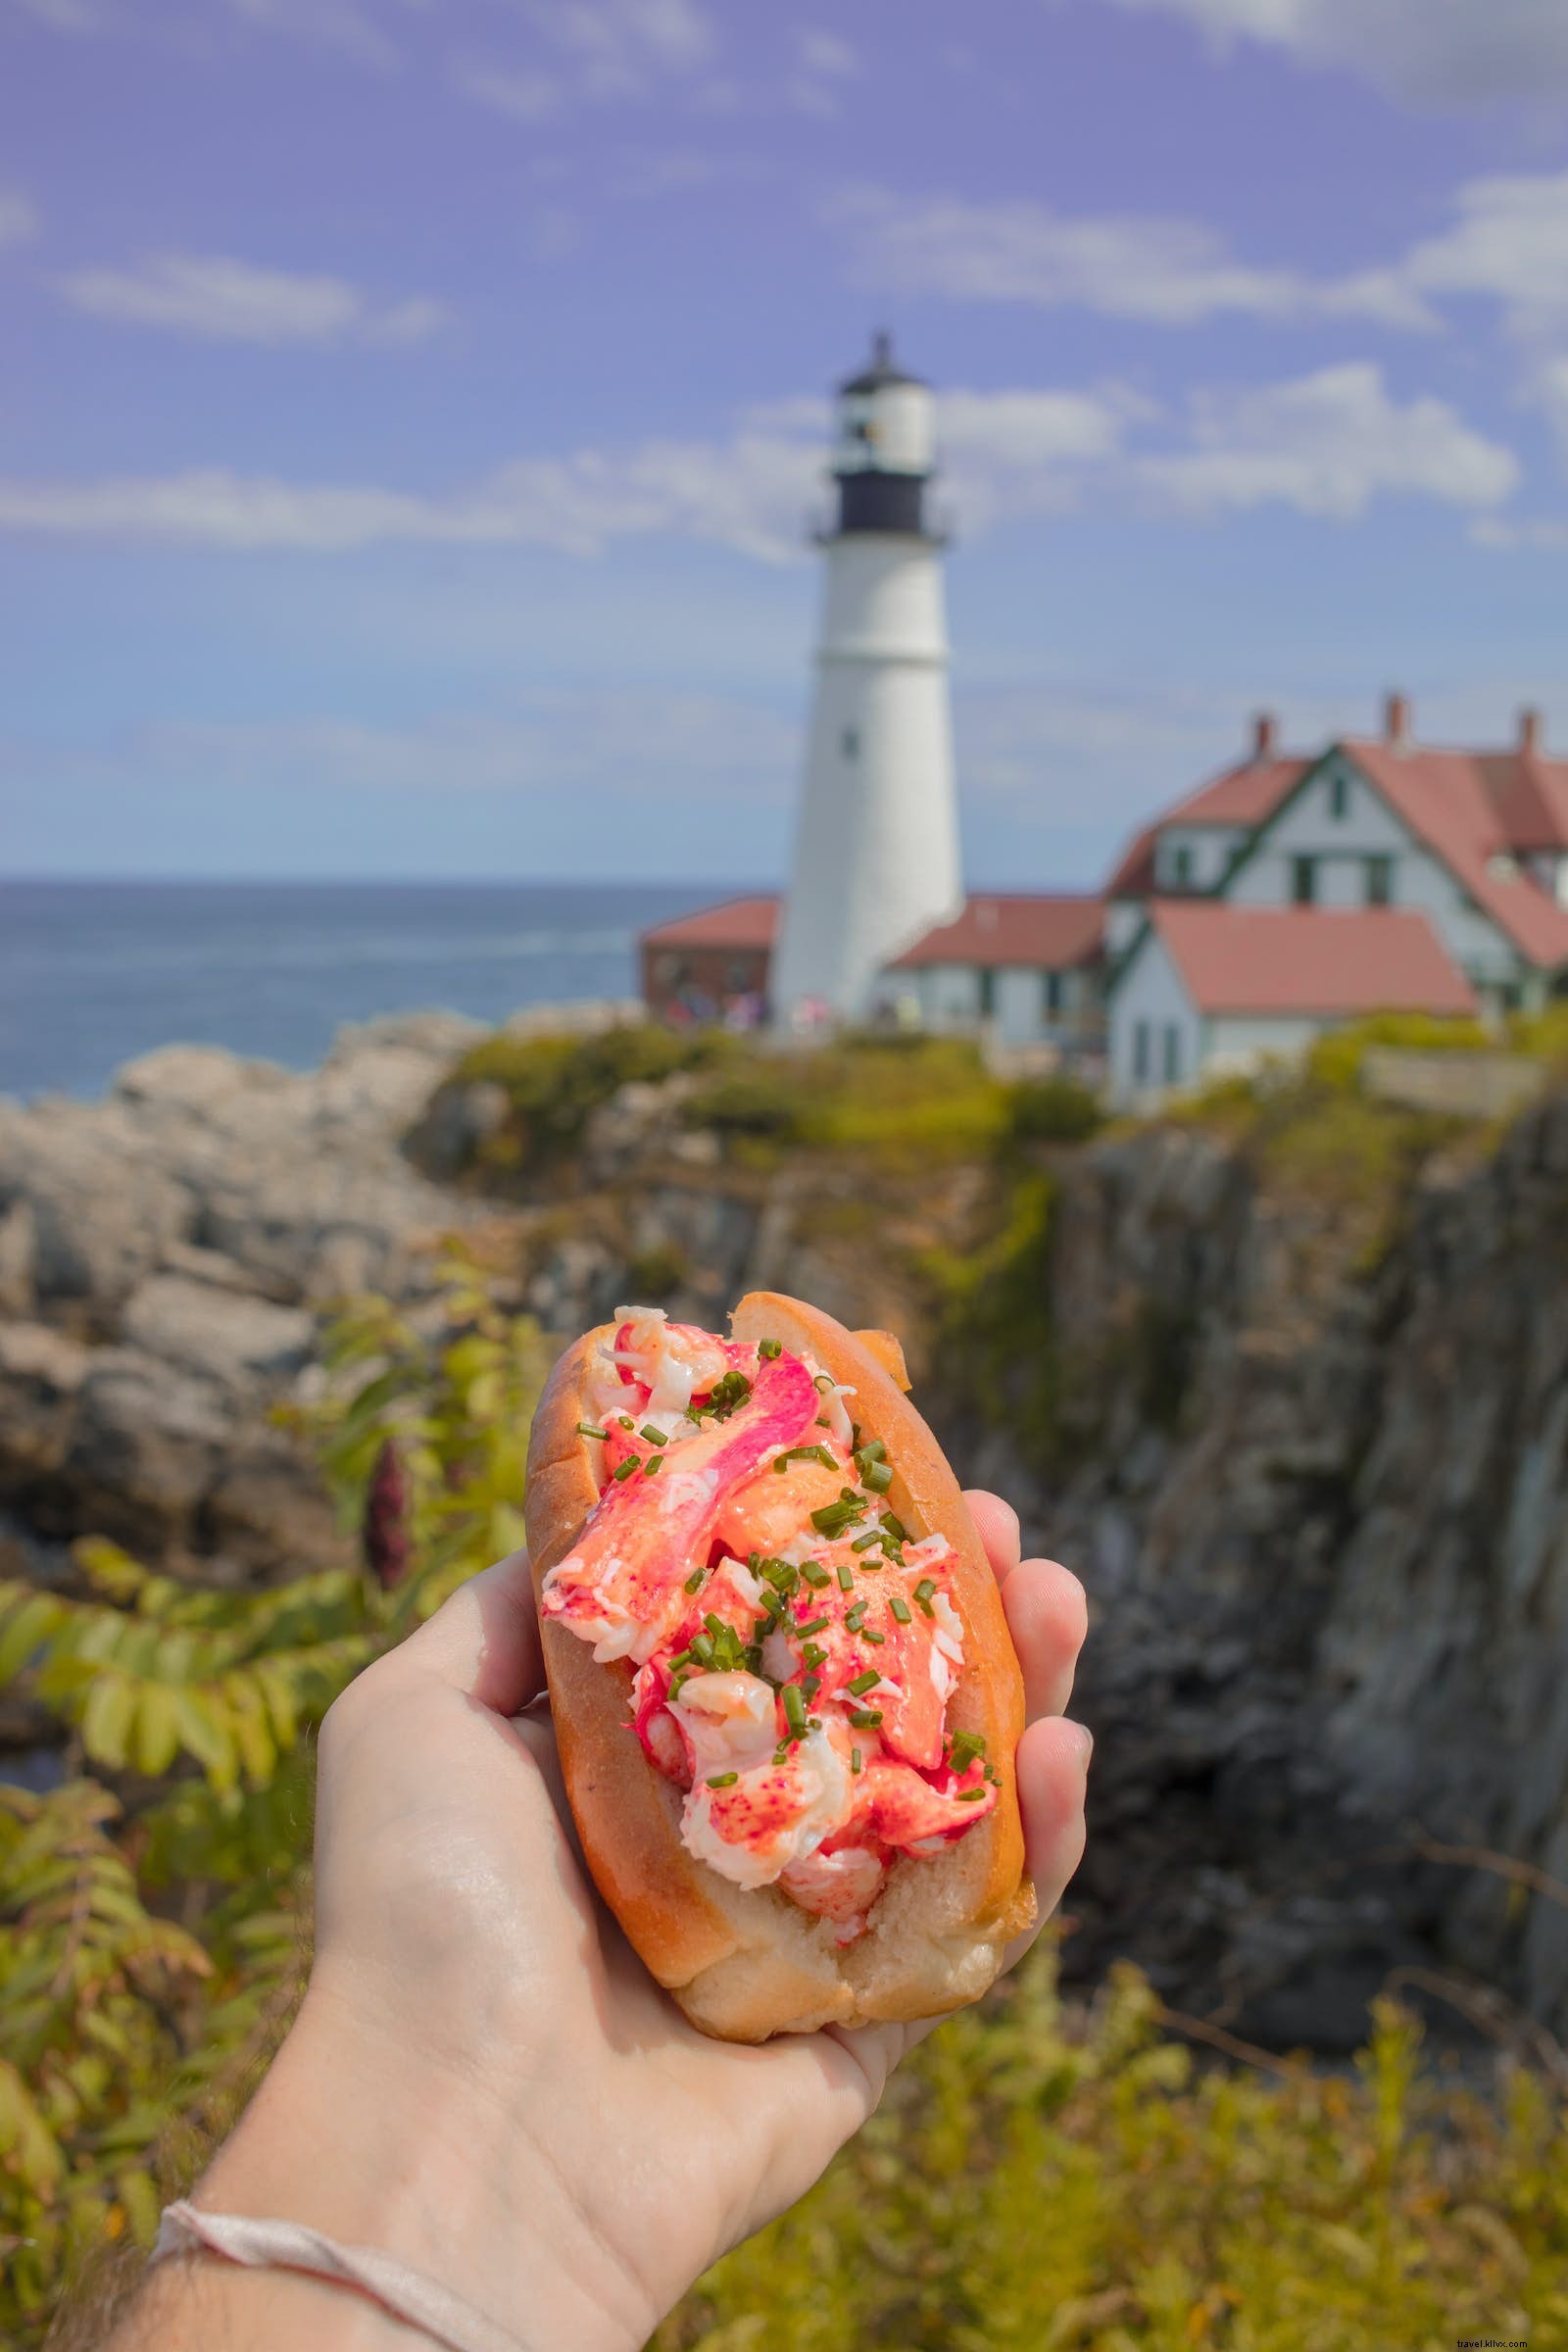 Makanan pokok kota pantai:sandwich untuk dimakan di tepi laut 